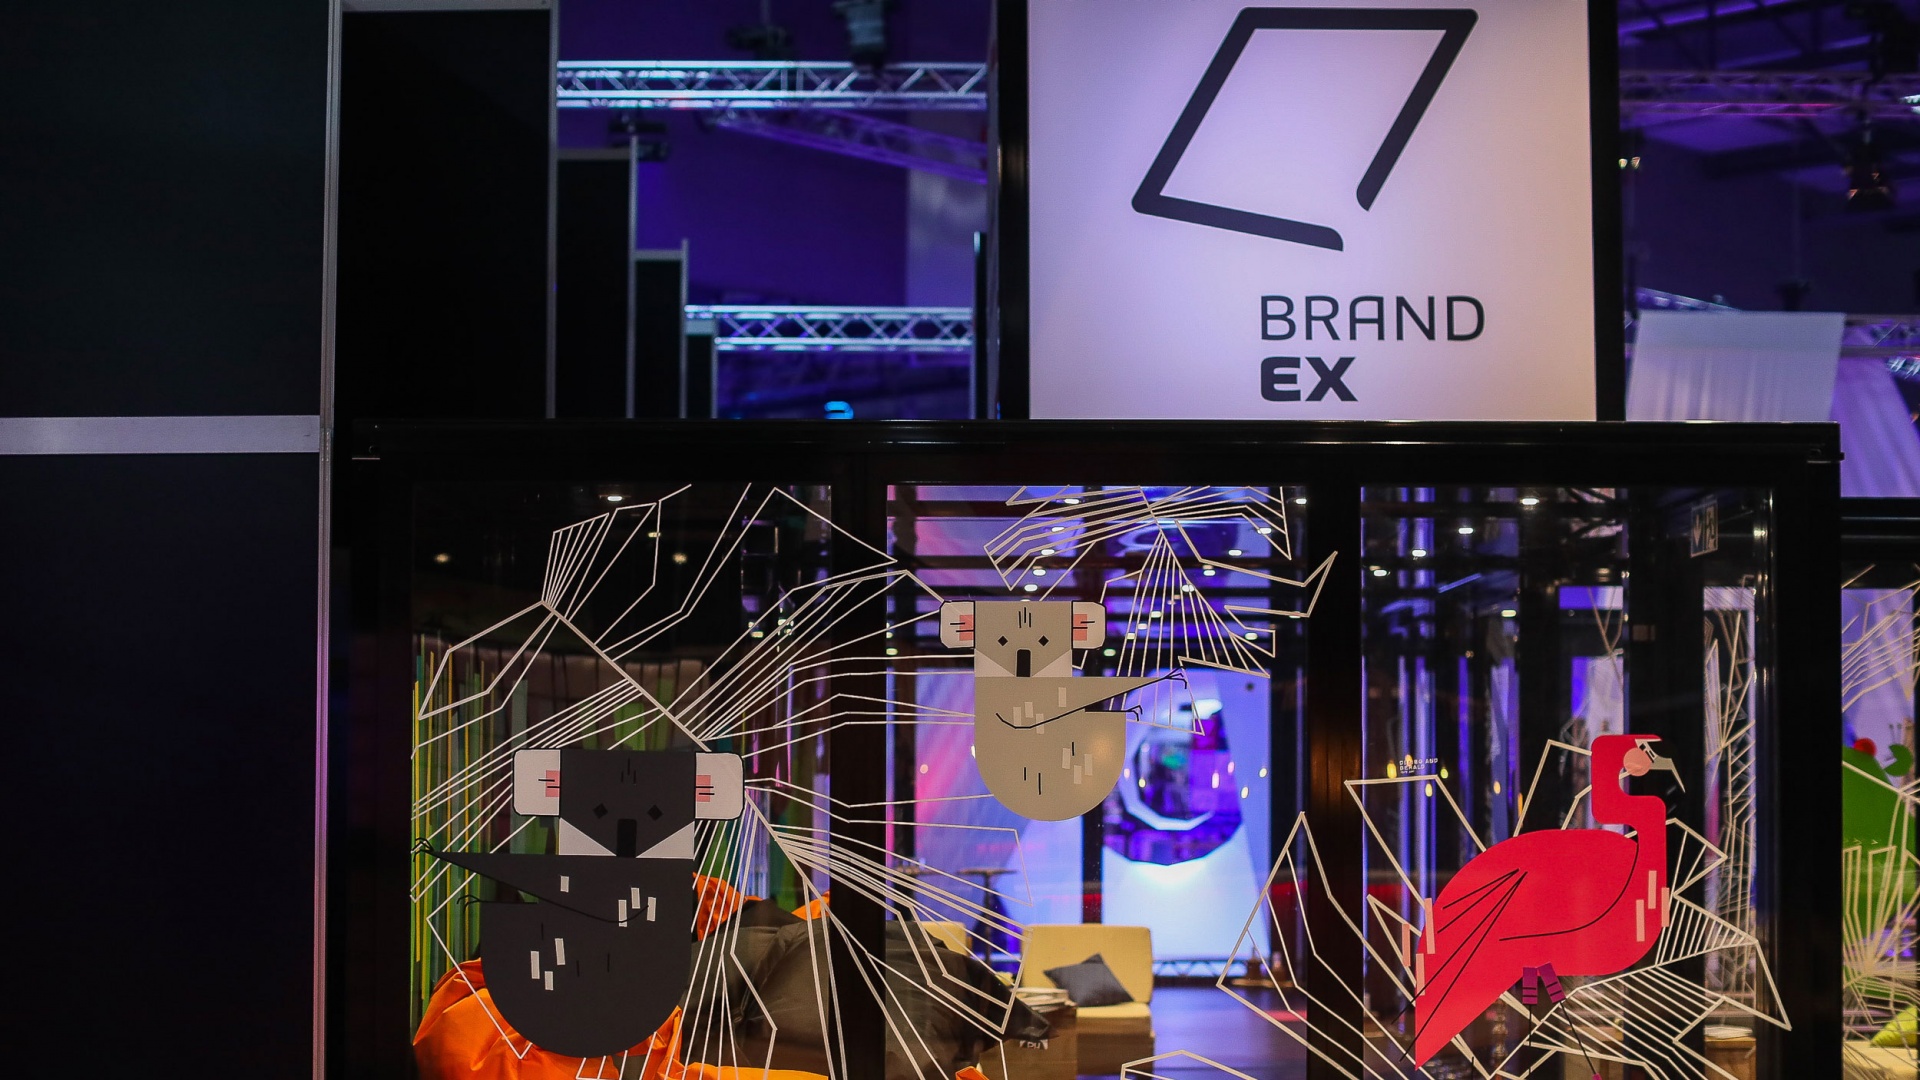 International Festival of Brand Experience 2019